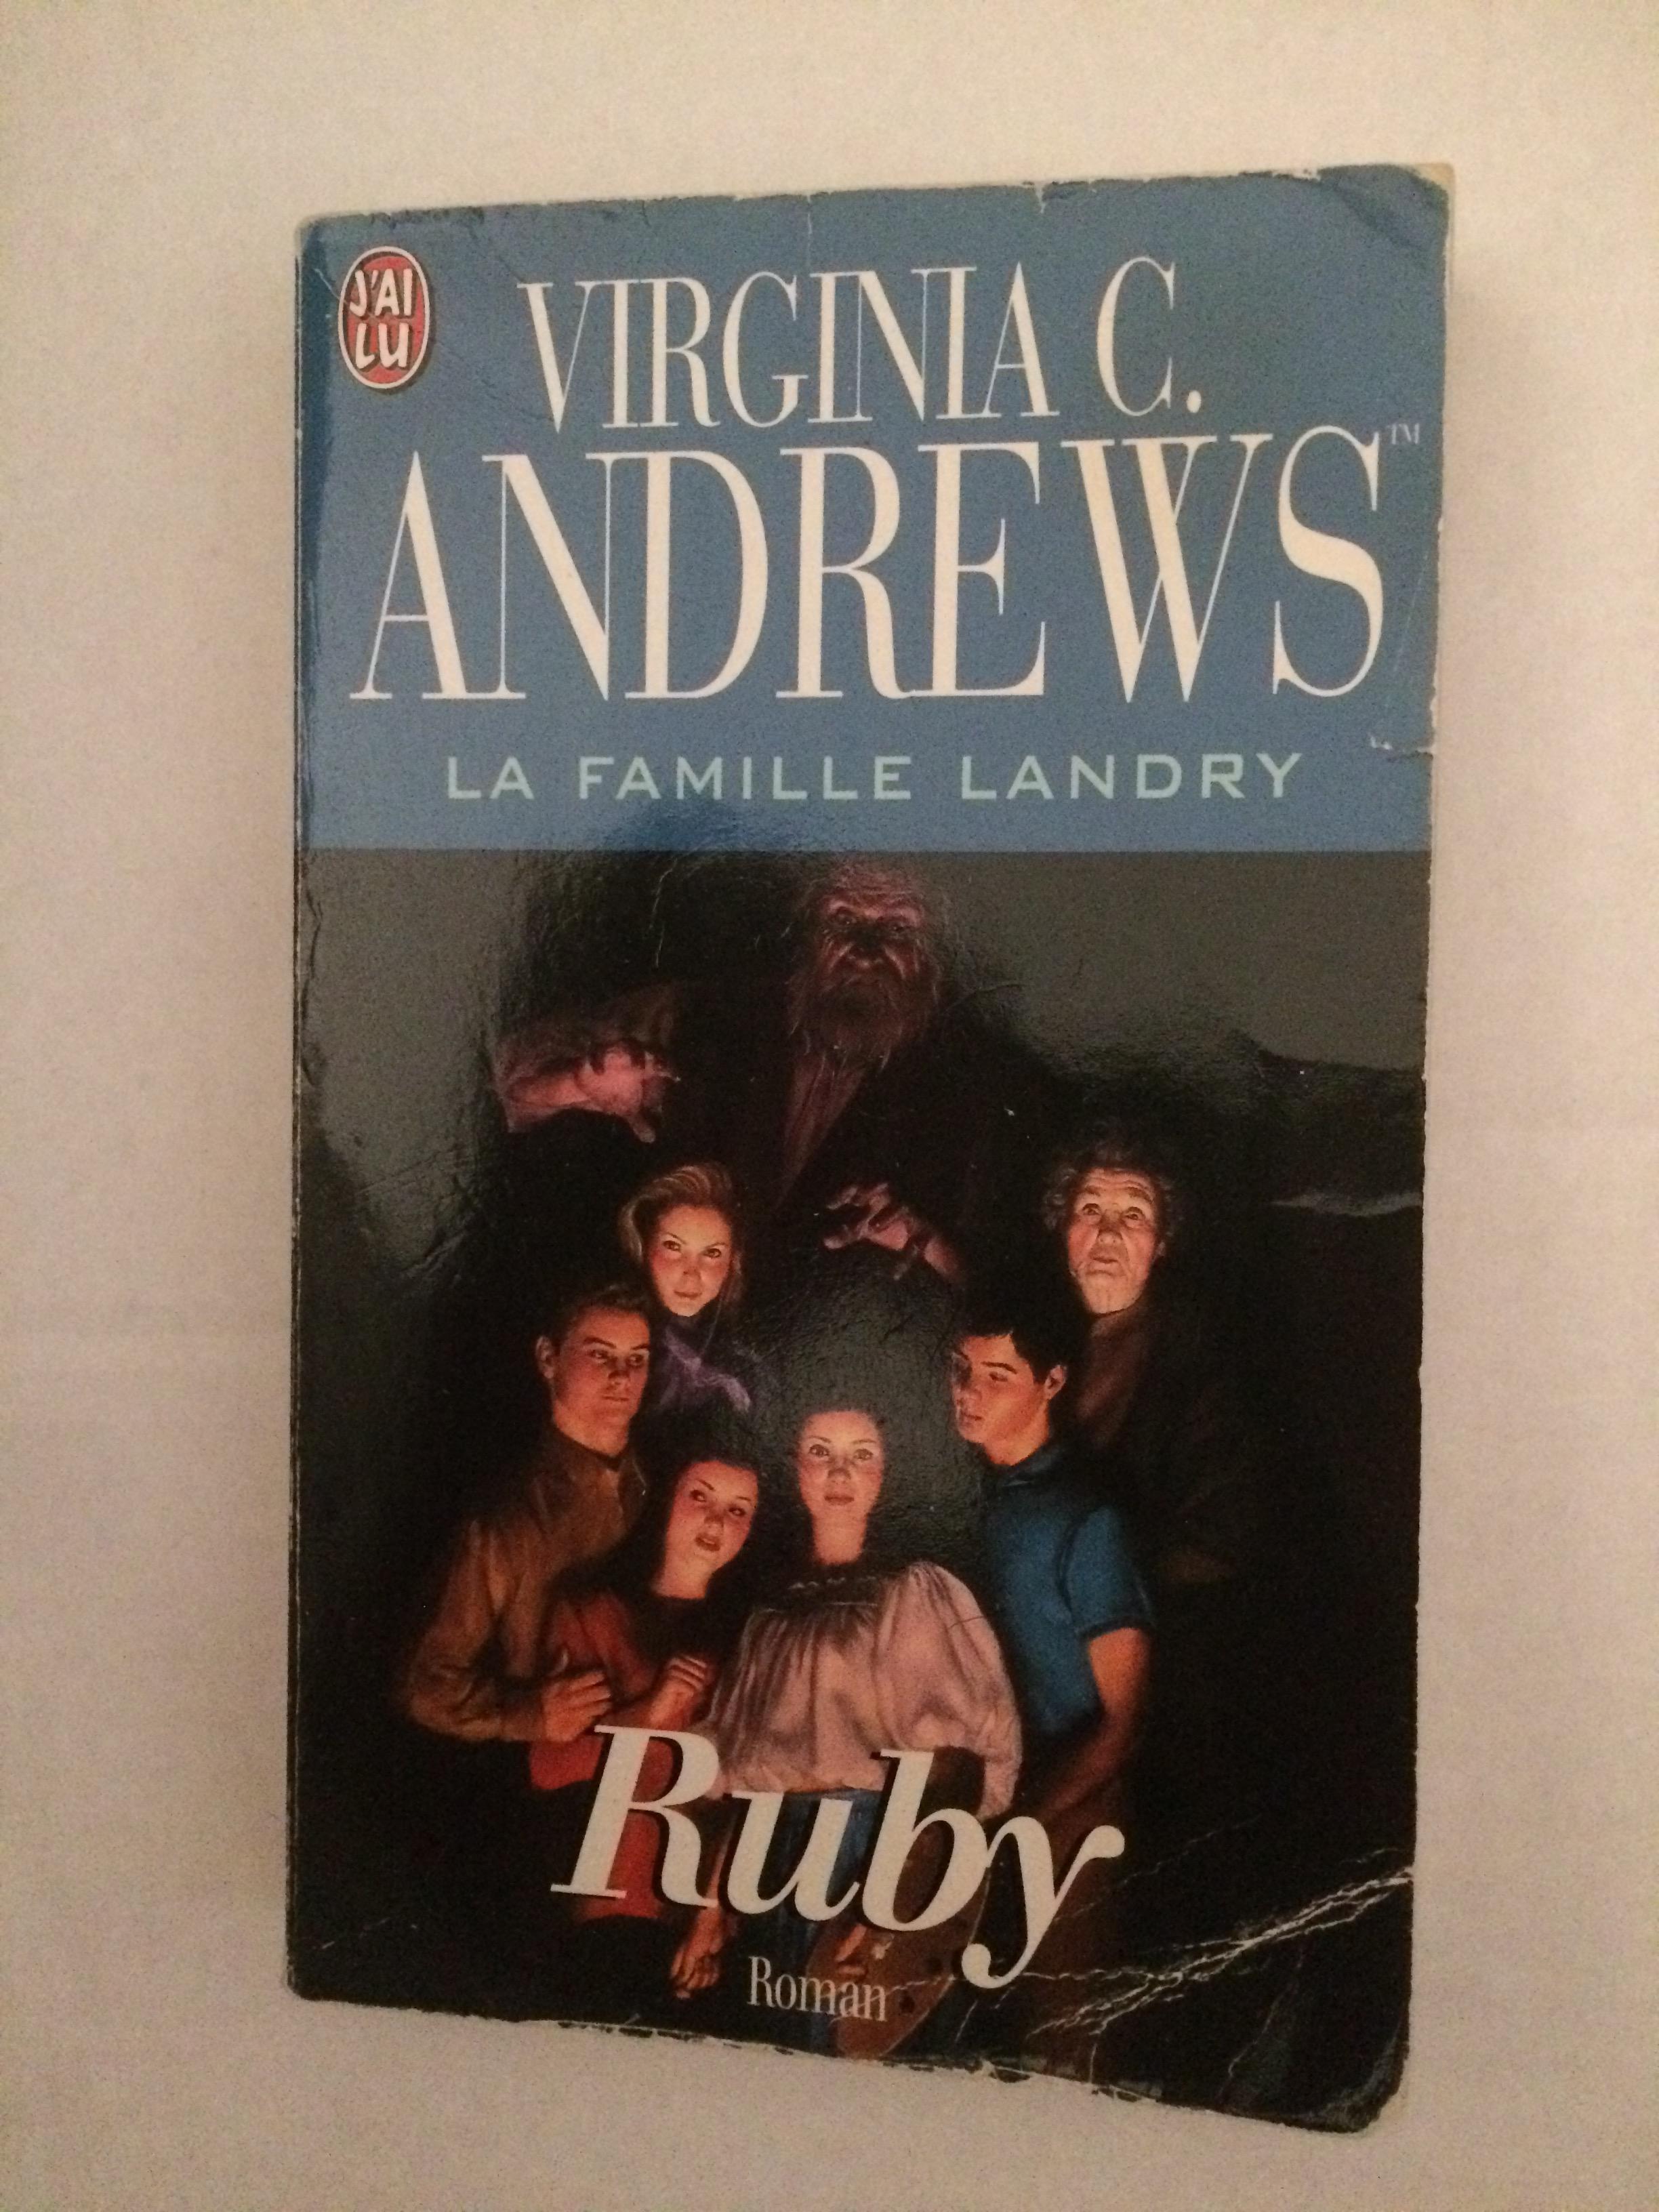 troc de troc la famille landry - volume 1 : ruby de virginia c. andrews image 0